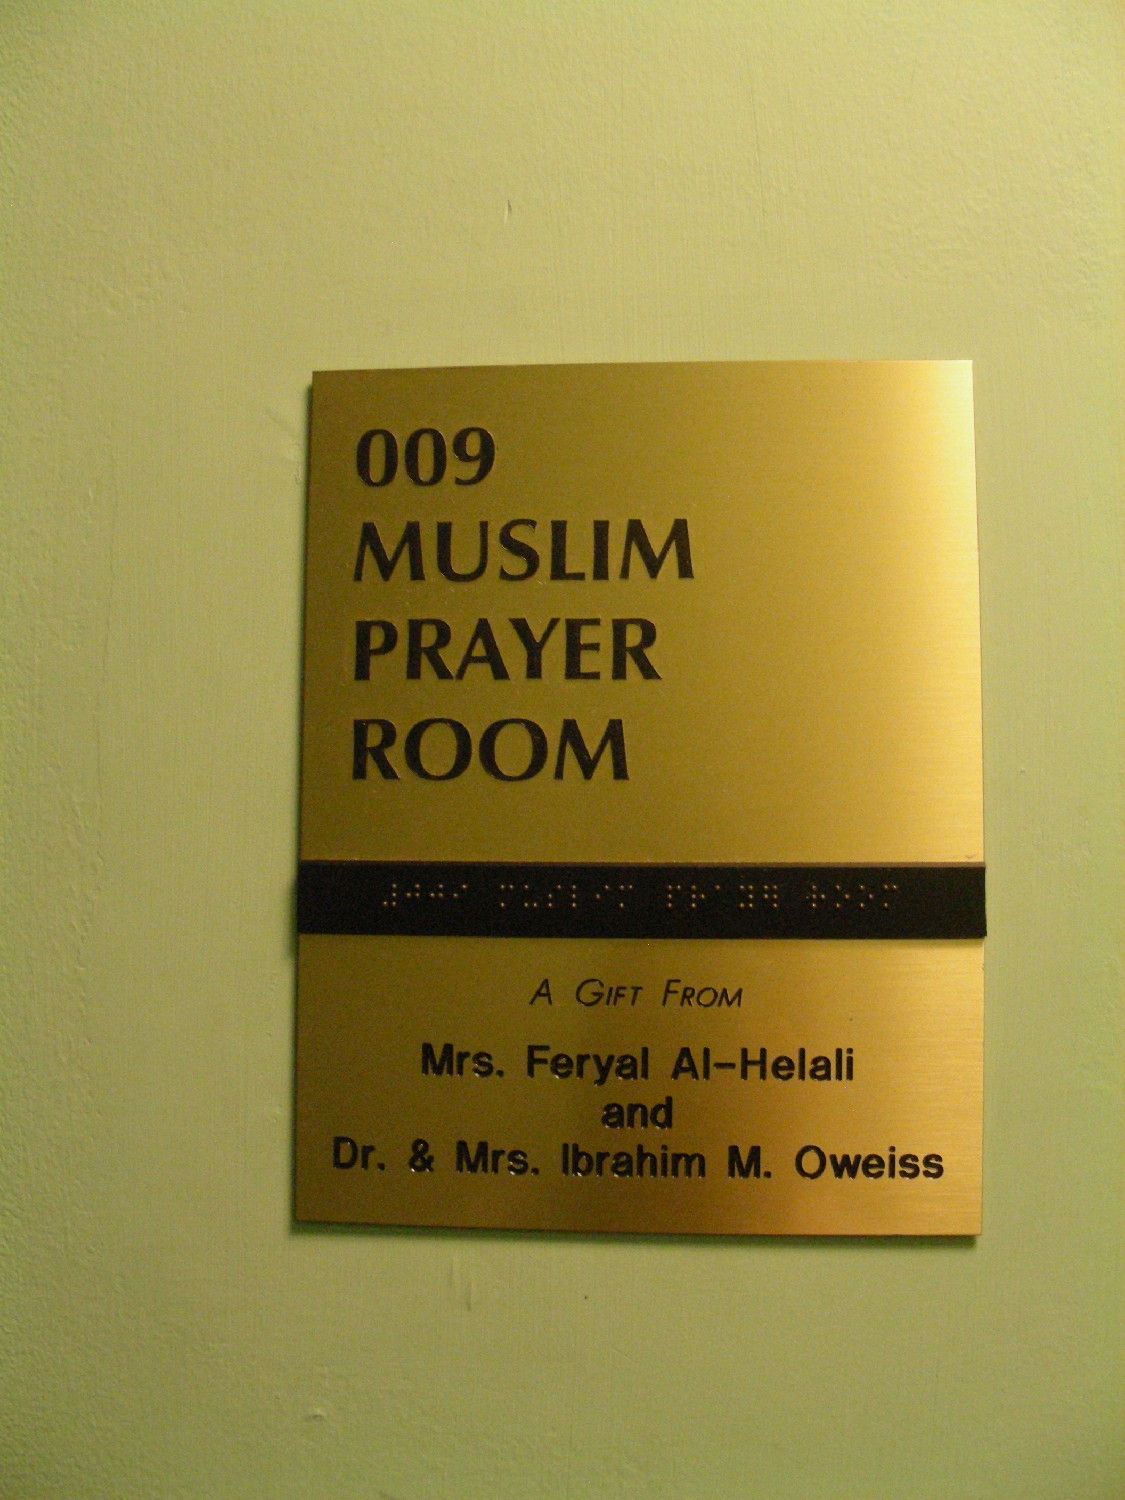 Prayer room sign in Copley Hall hallway